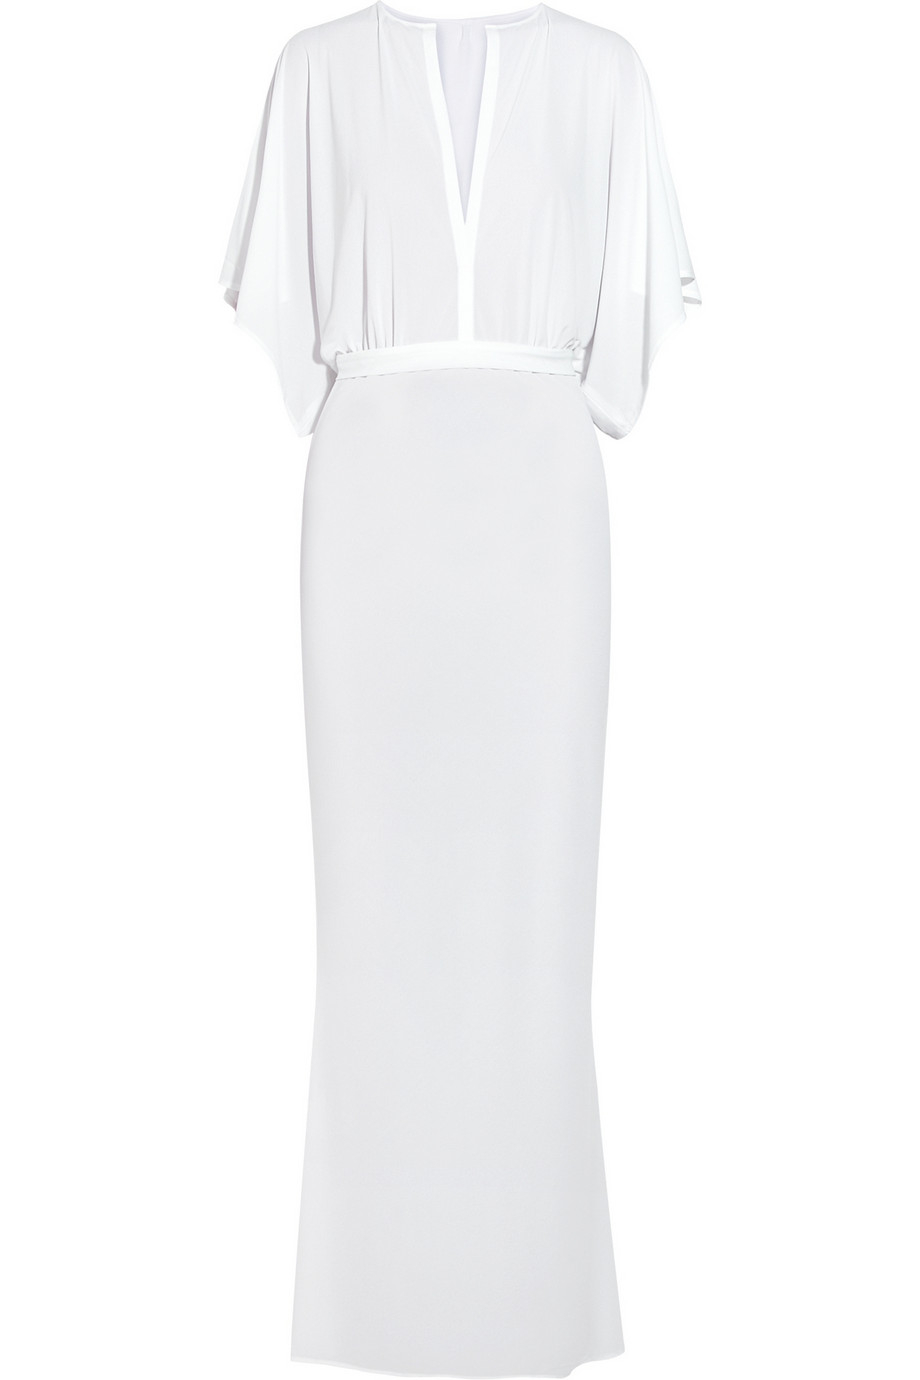 Norma kamali Obie Stretch-Jersey Maxi Dress in White | Lyst